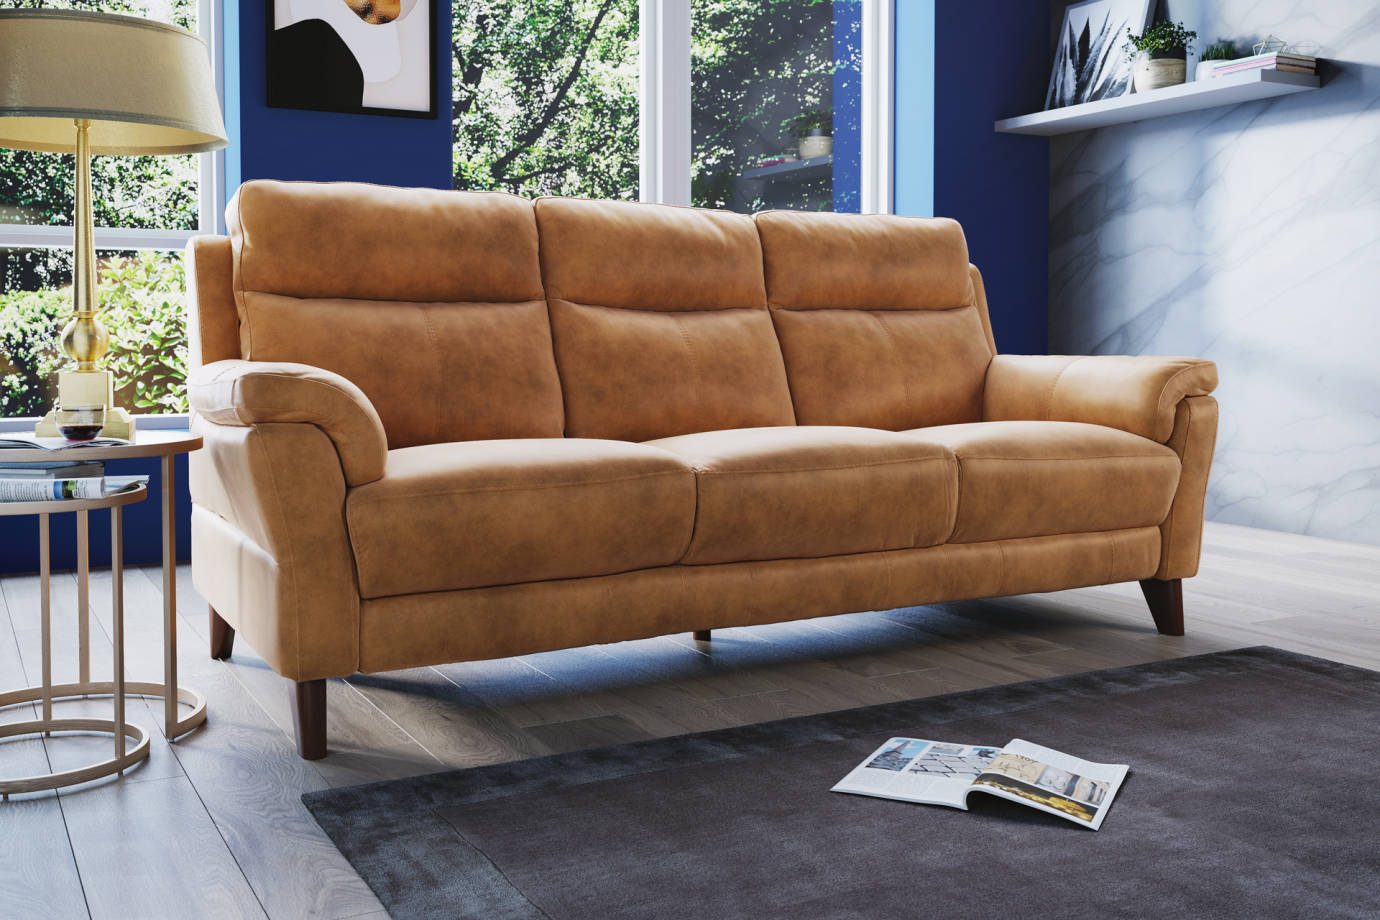 ikea leather recliner sofa